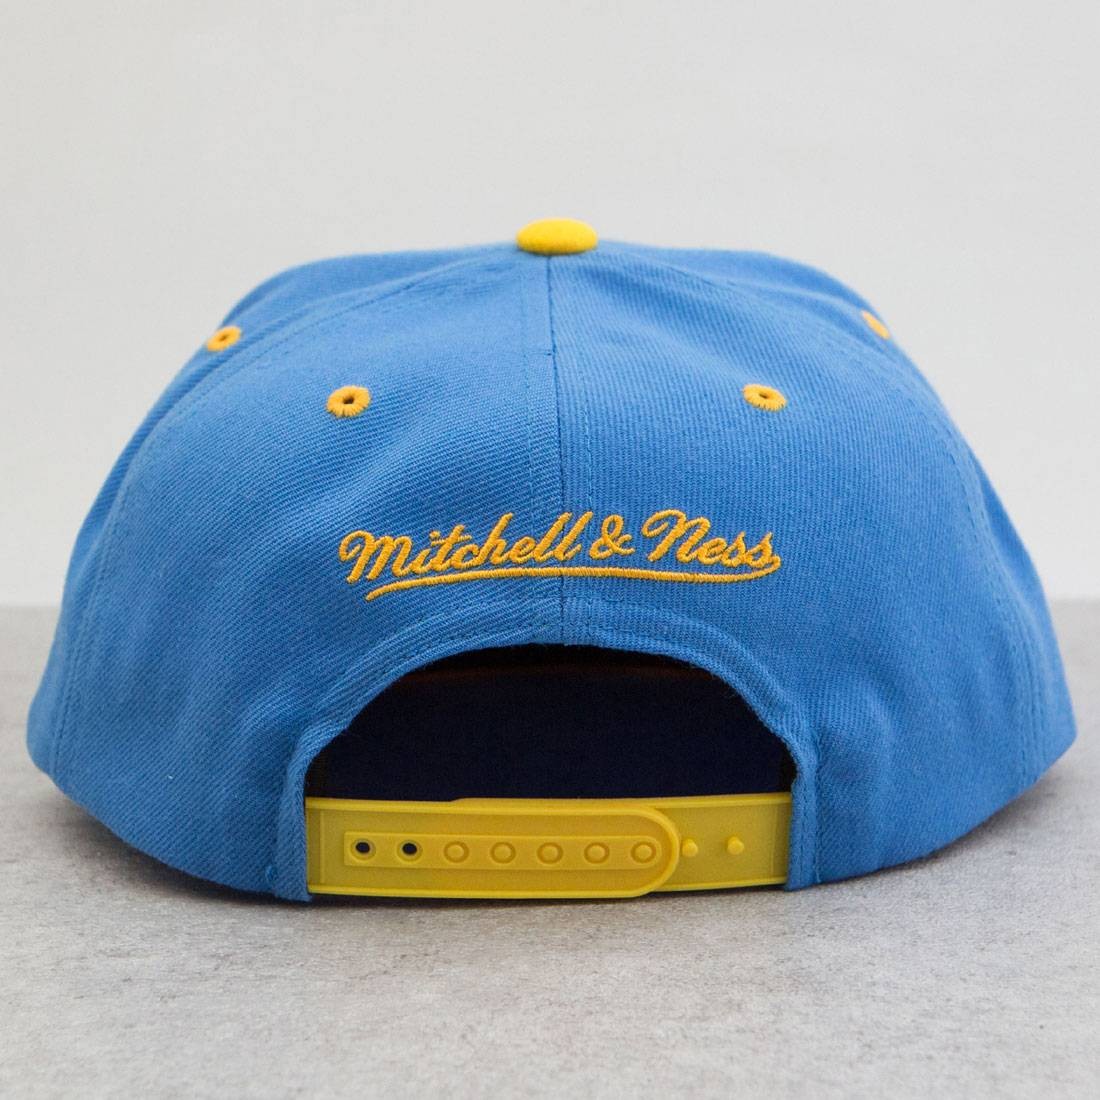 BAIT x Mitchell And Ness Bear Snapback Cap (blue / gold)